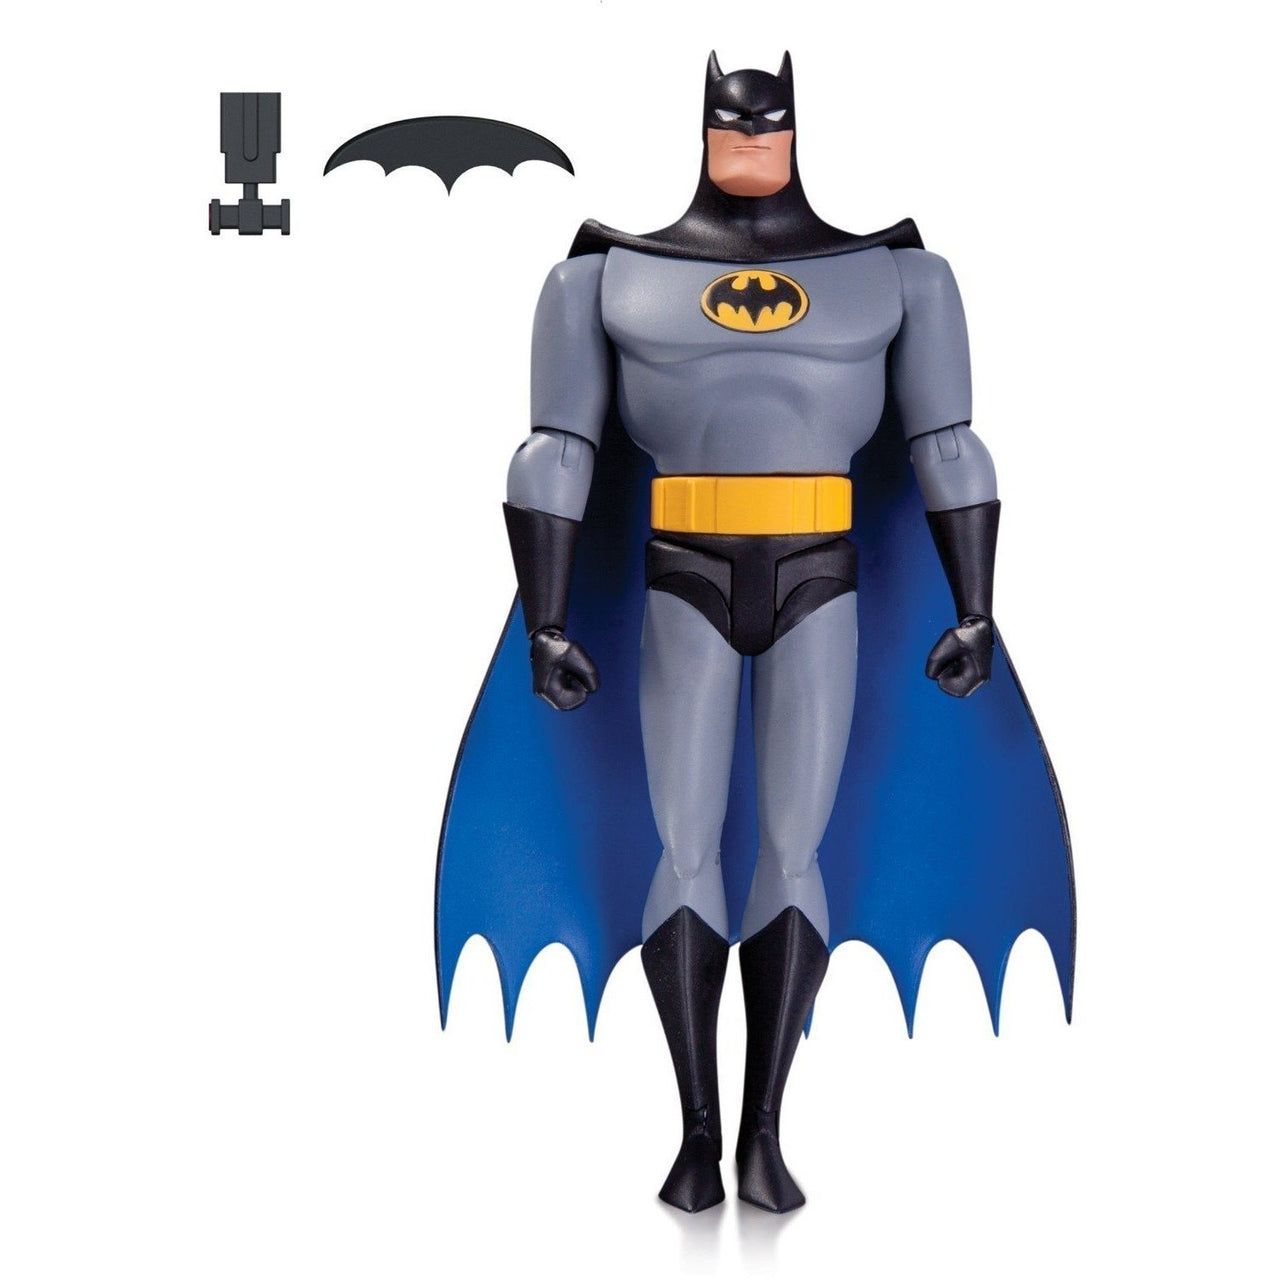 DC Collectibles Batman: The Animated Series Batman Action figure - Nerd Arena